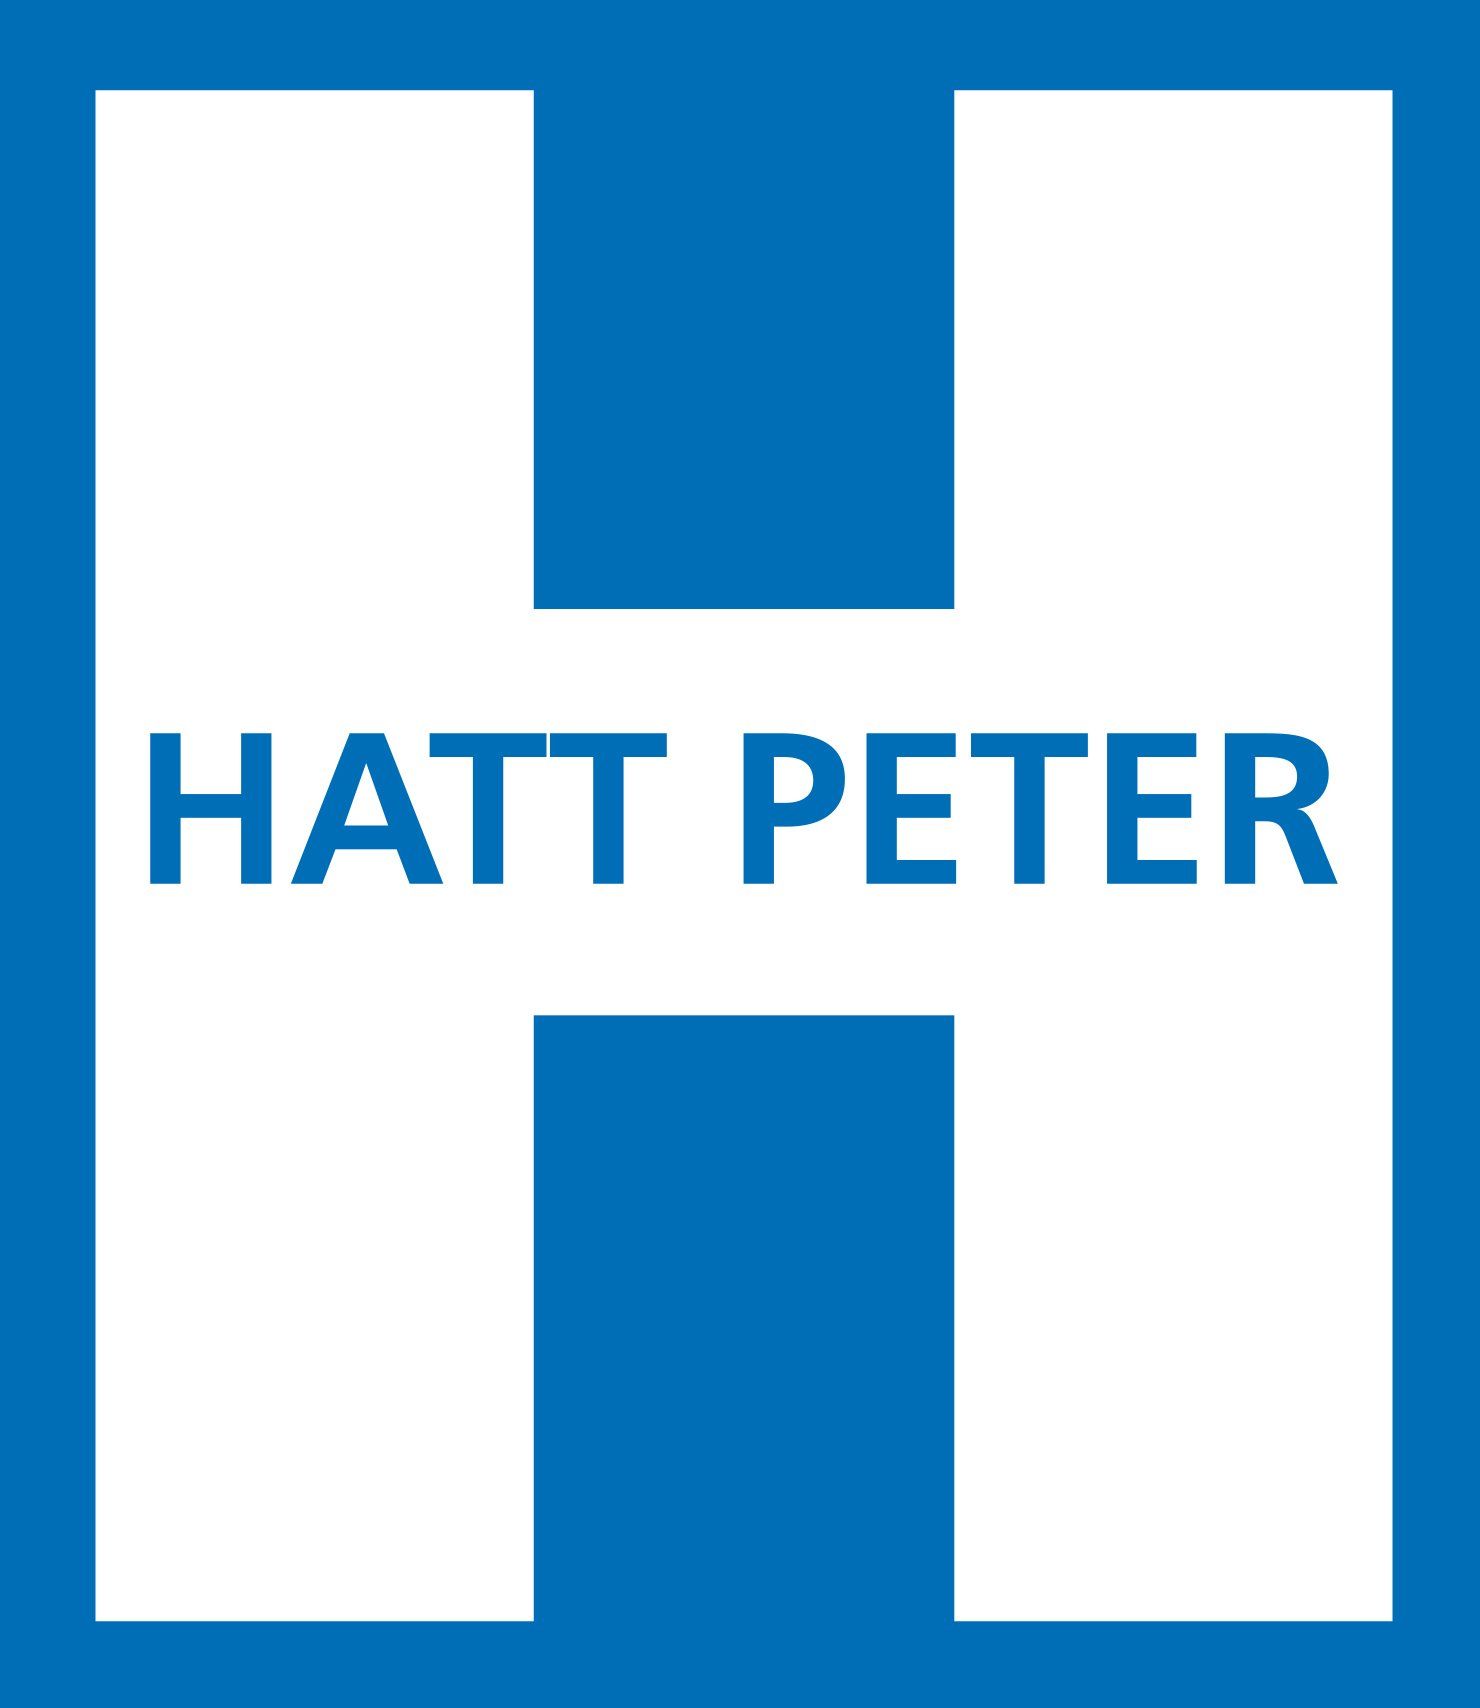 Peter Hatt, Tiefbau, Kontakt